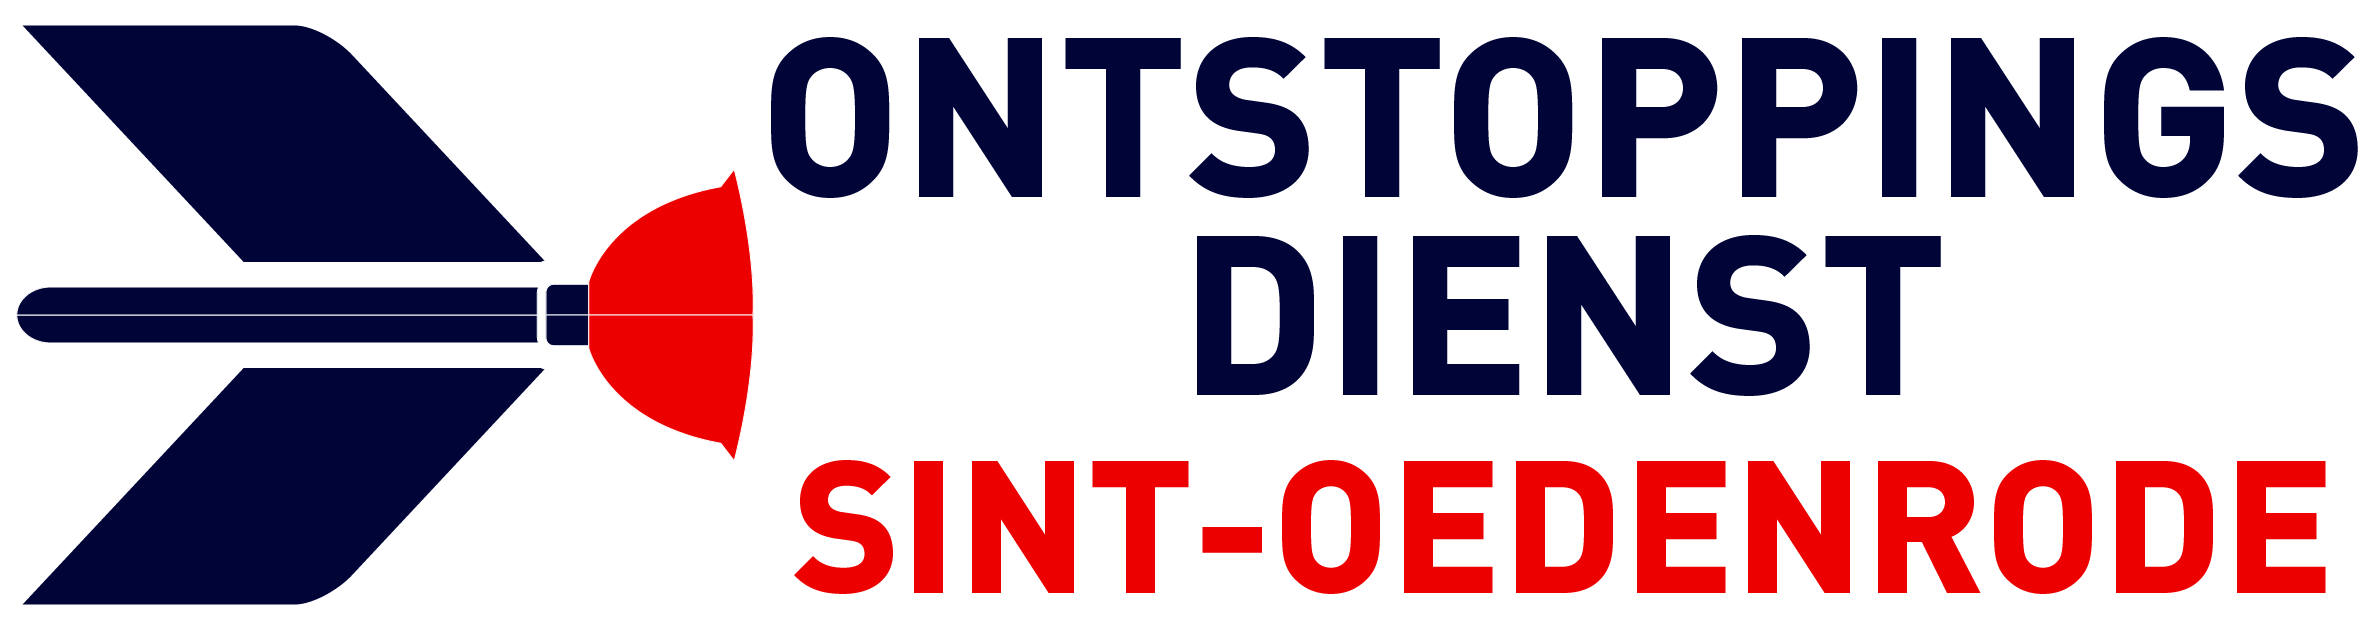 Ontstoppingsdienst Sint Oedenrode logo